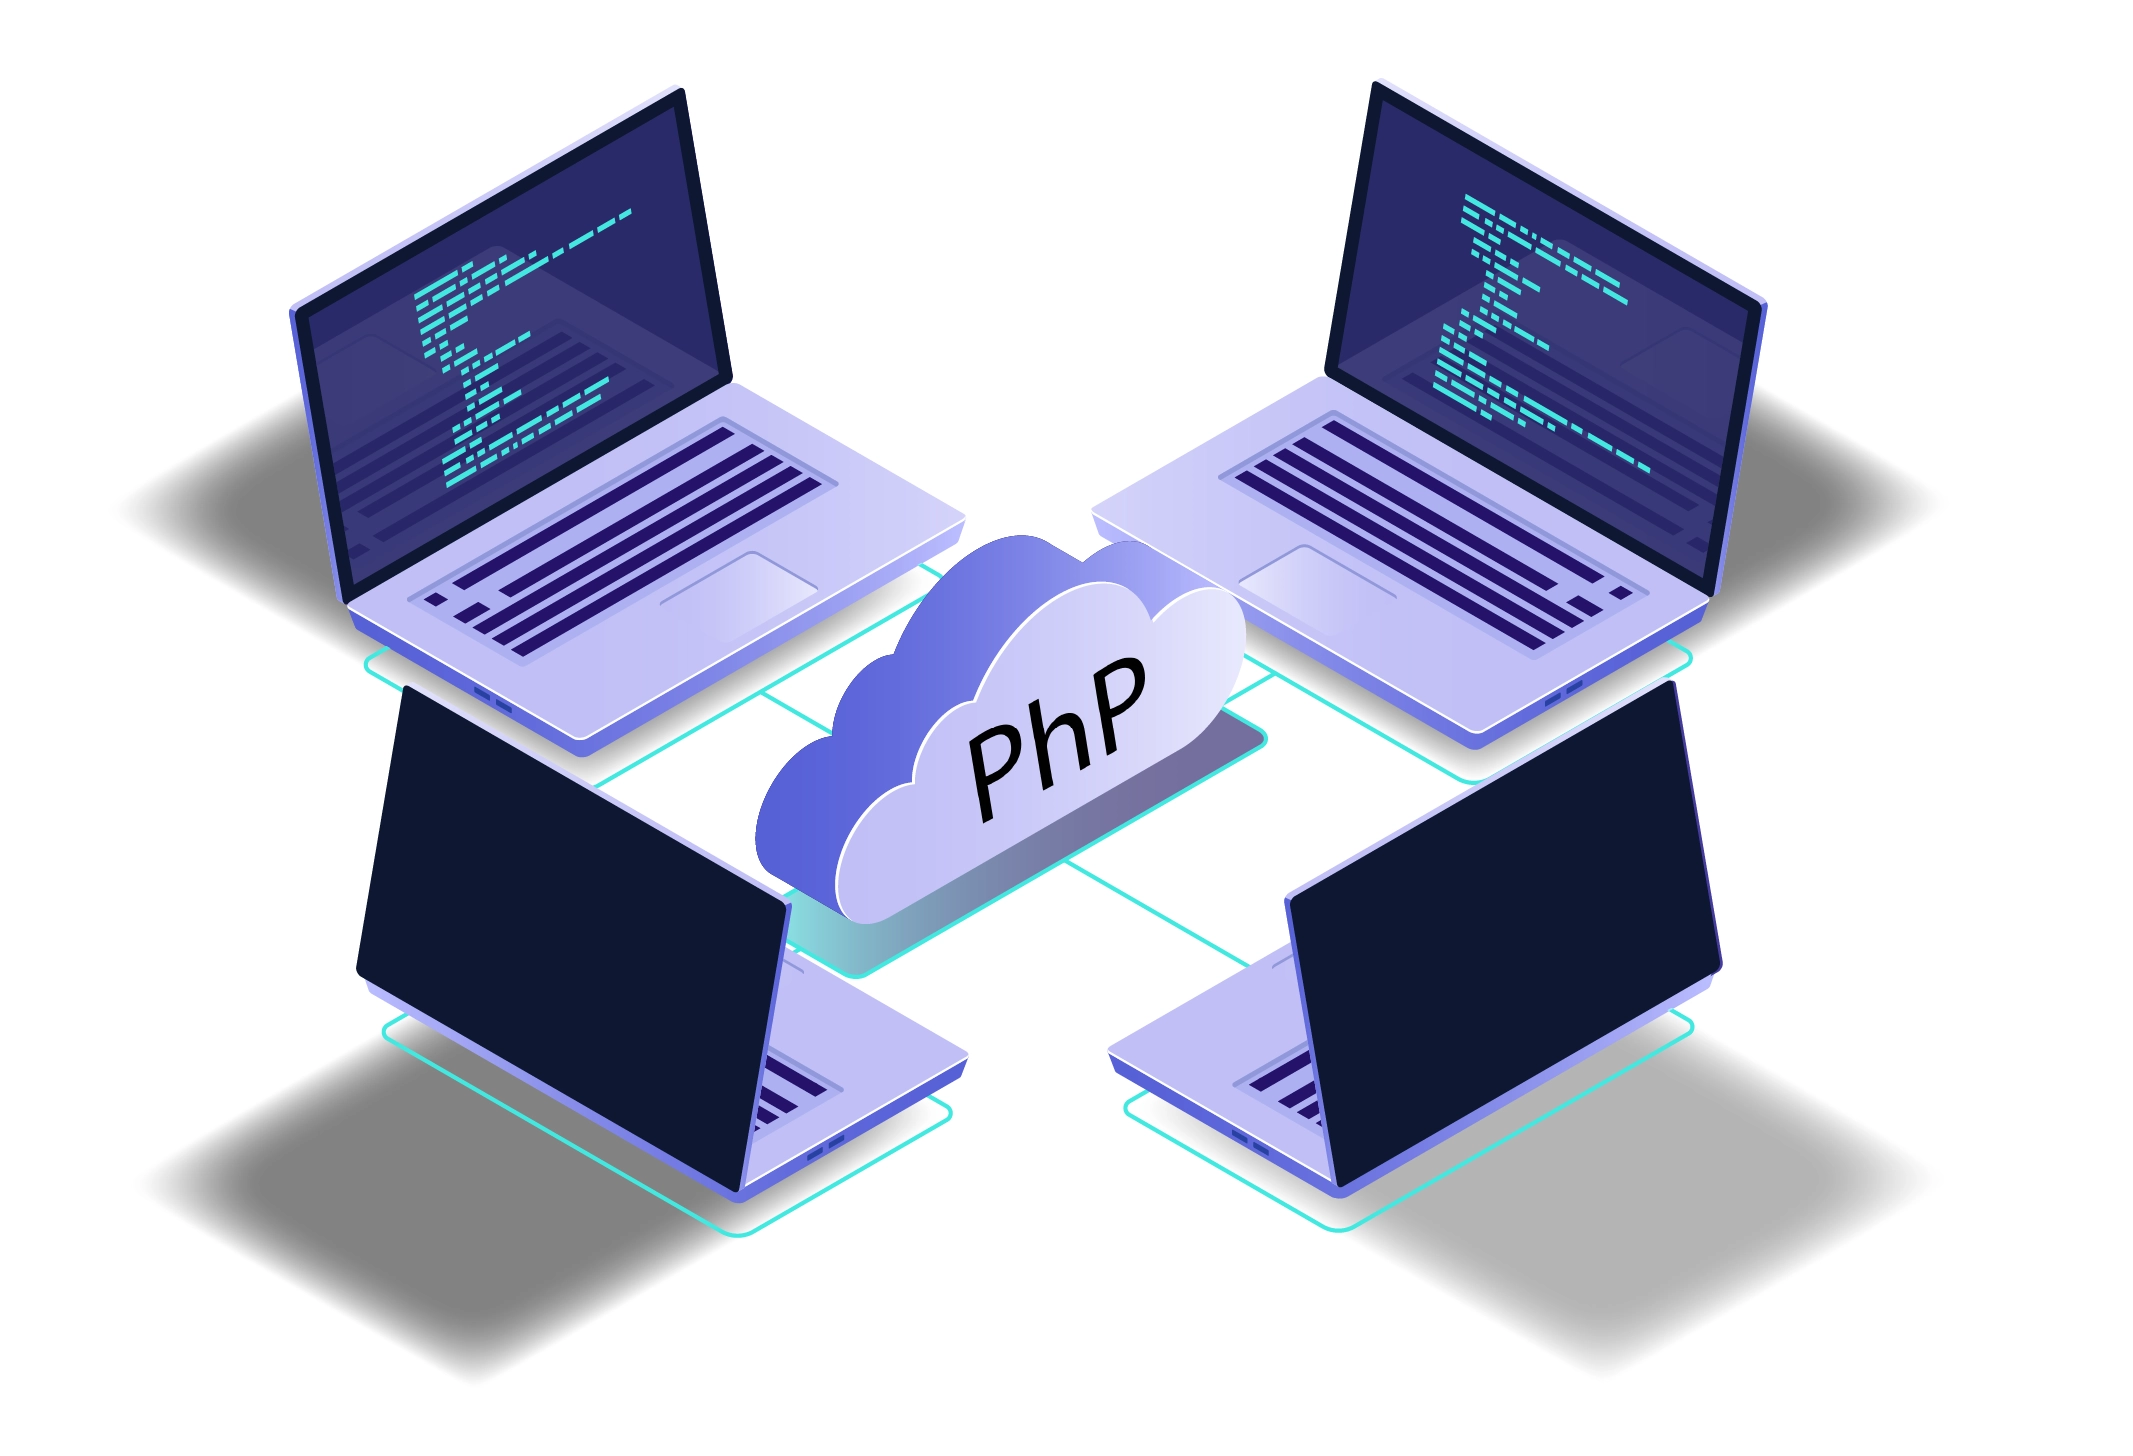 php cloud computing